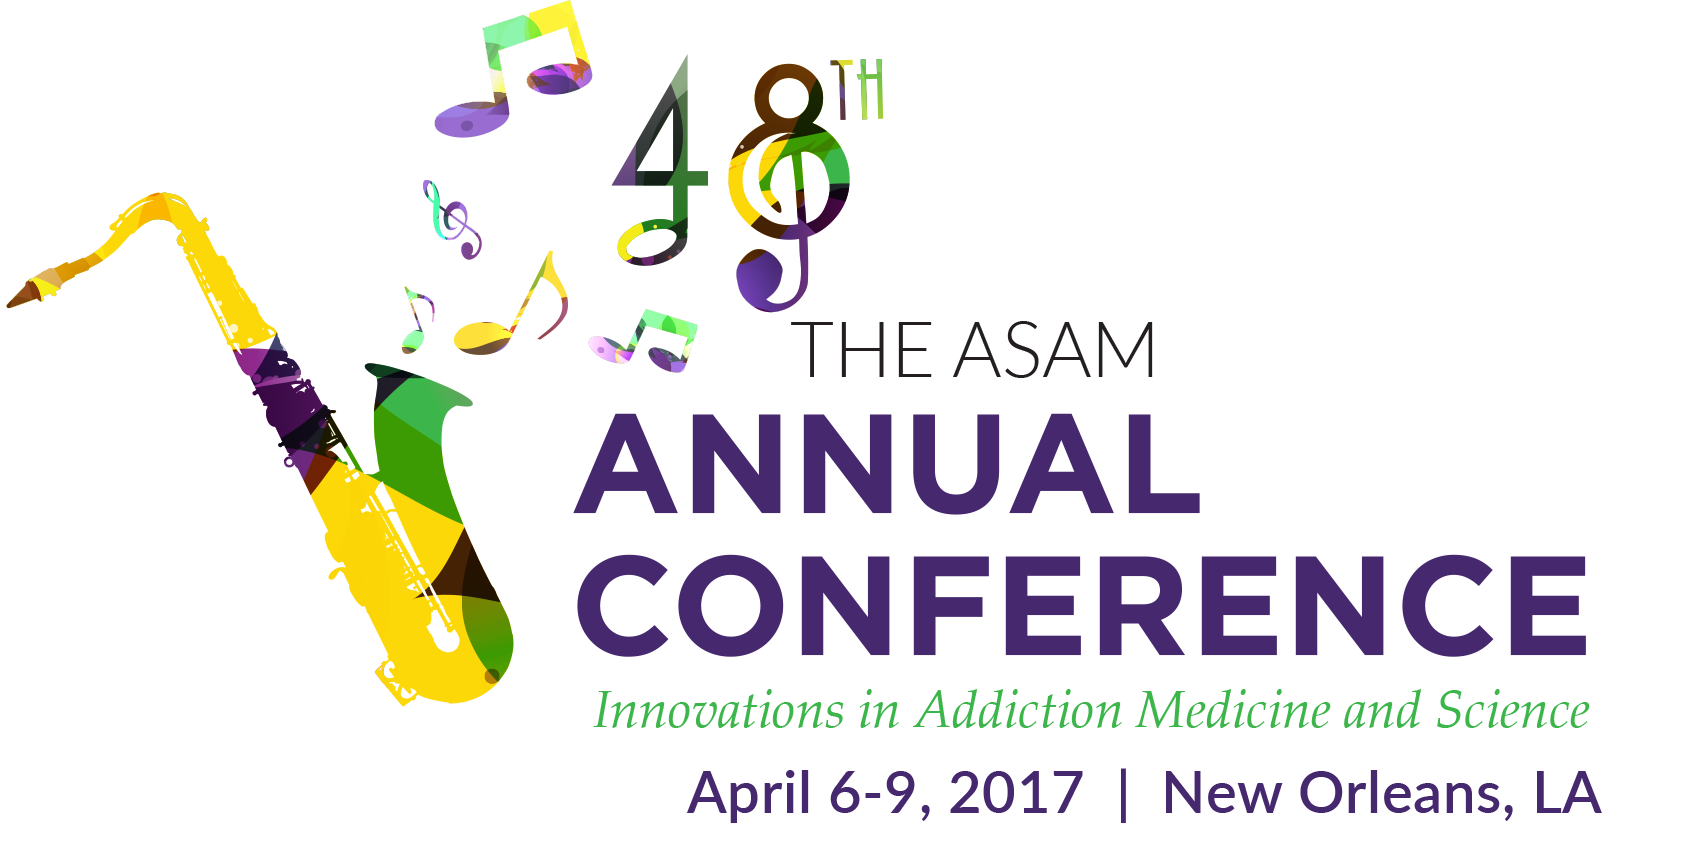 Asam Annual Conference 2023 2023 Calendar